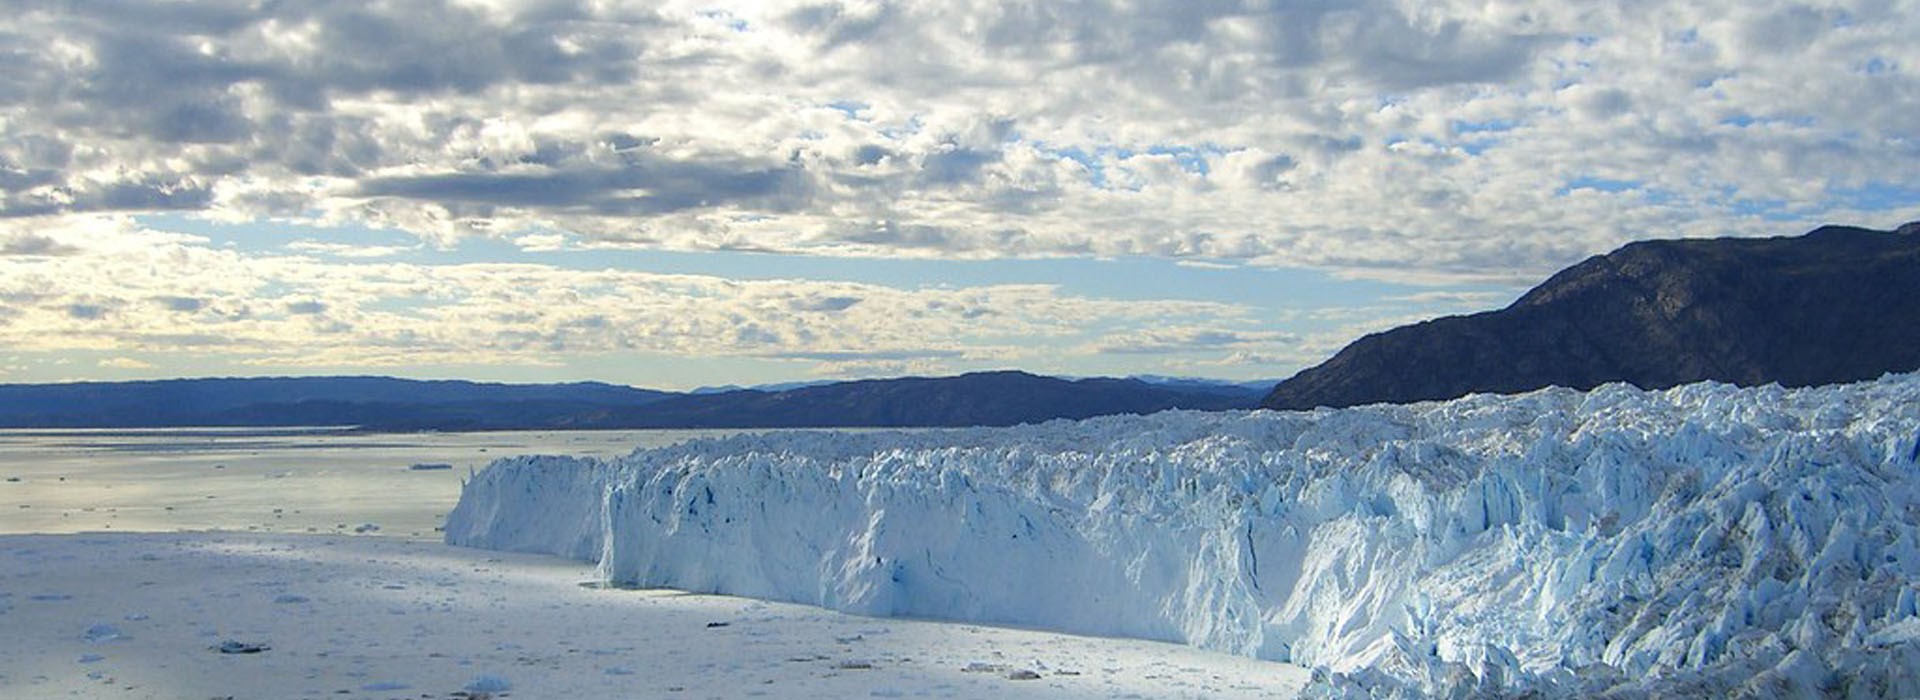 Visiter Le Glacier d'Eqi - Groenland